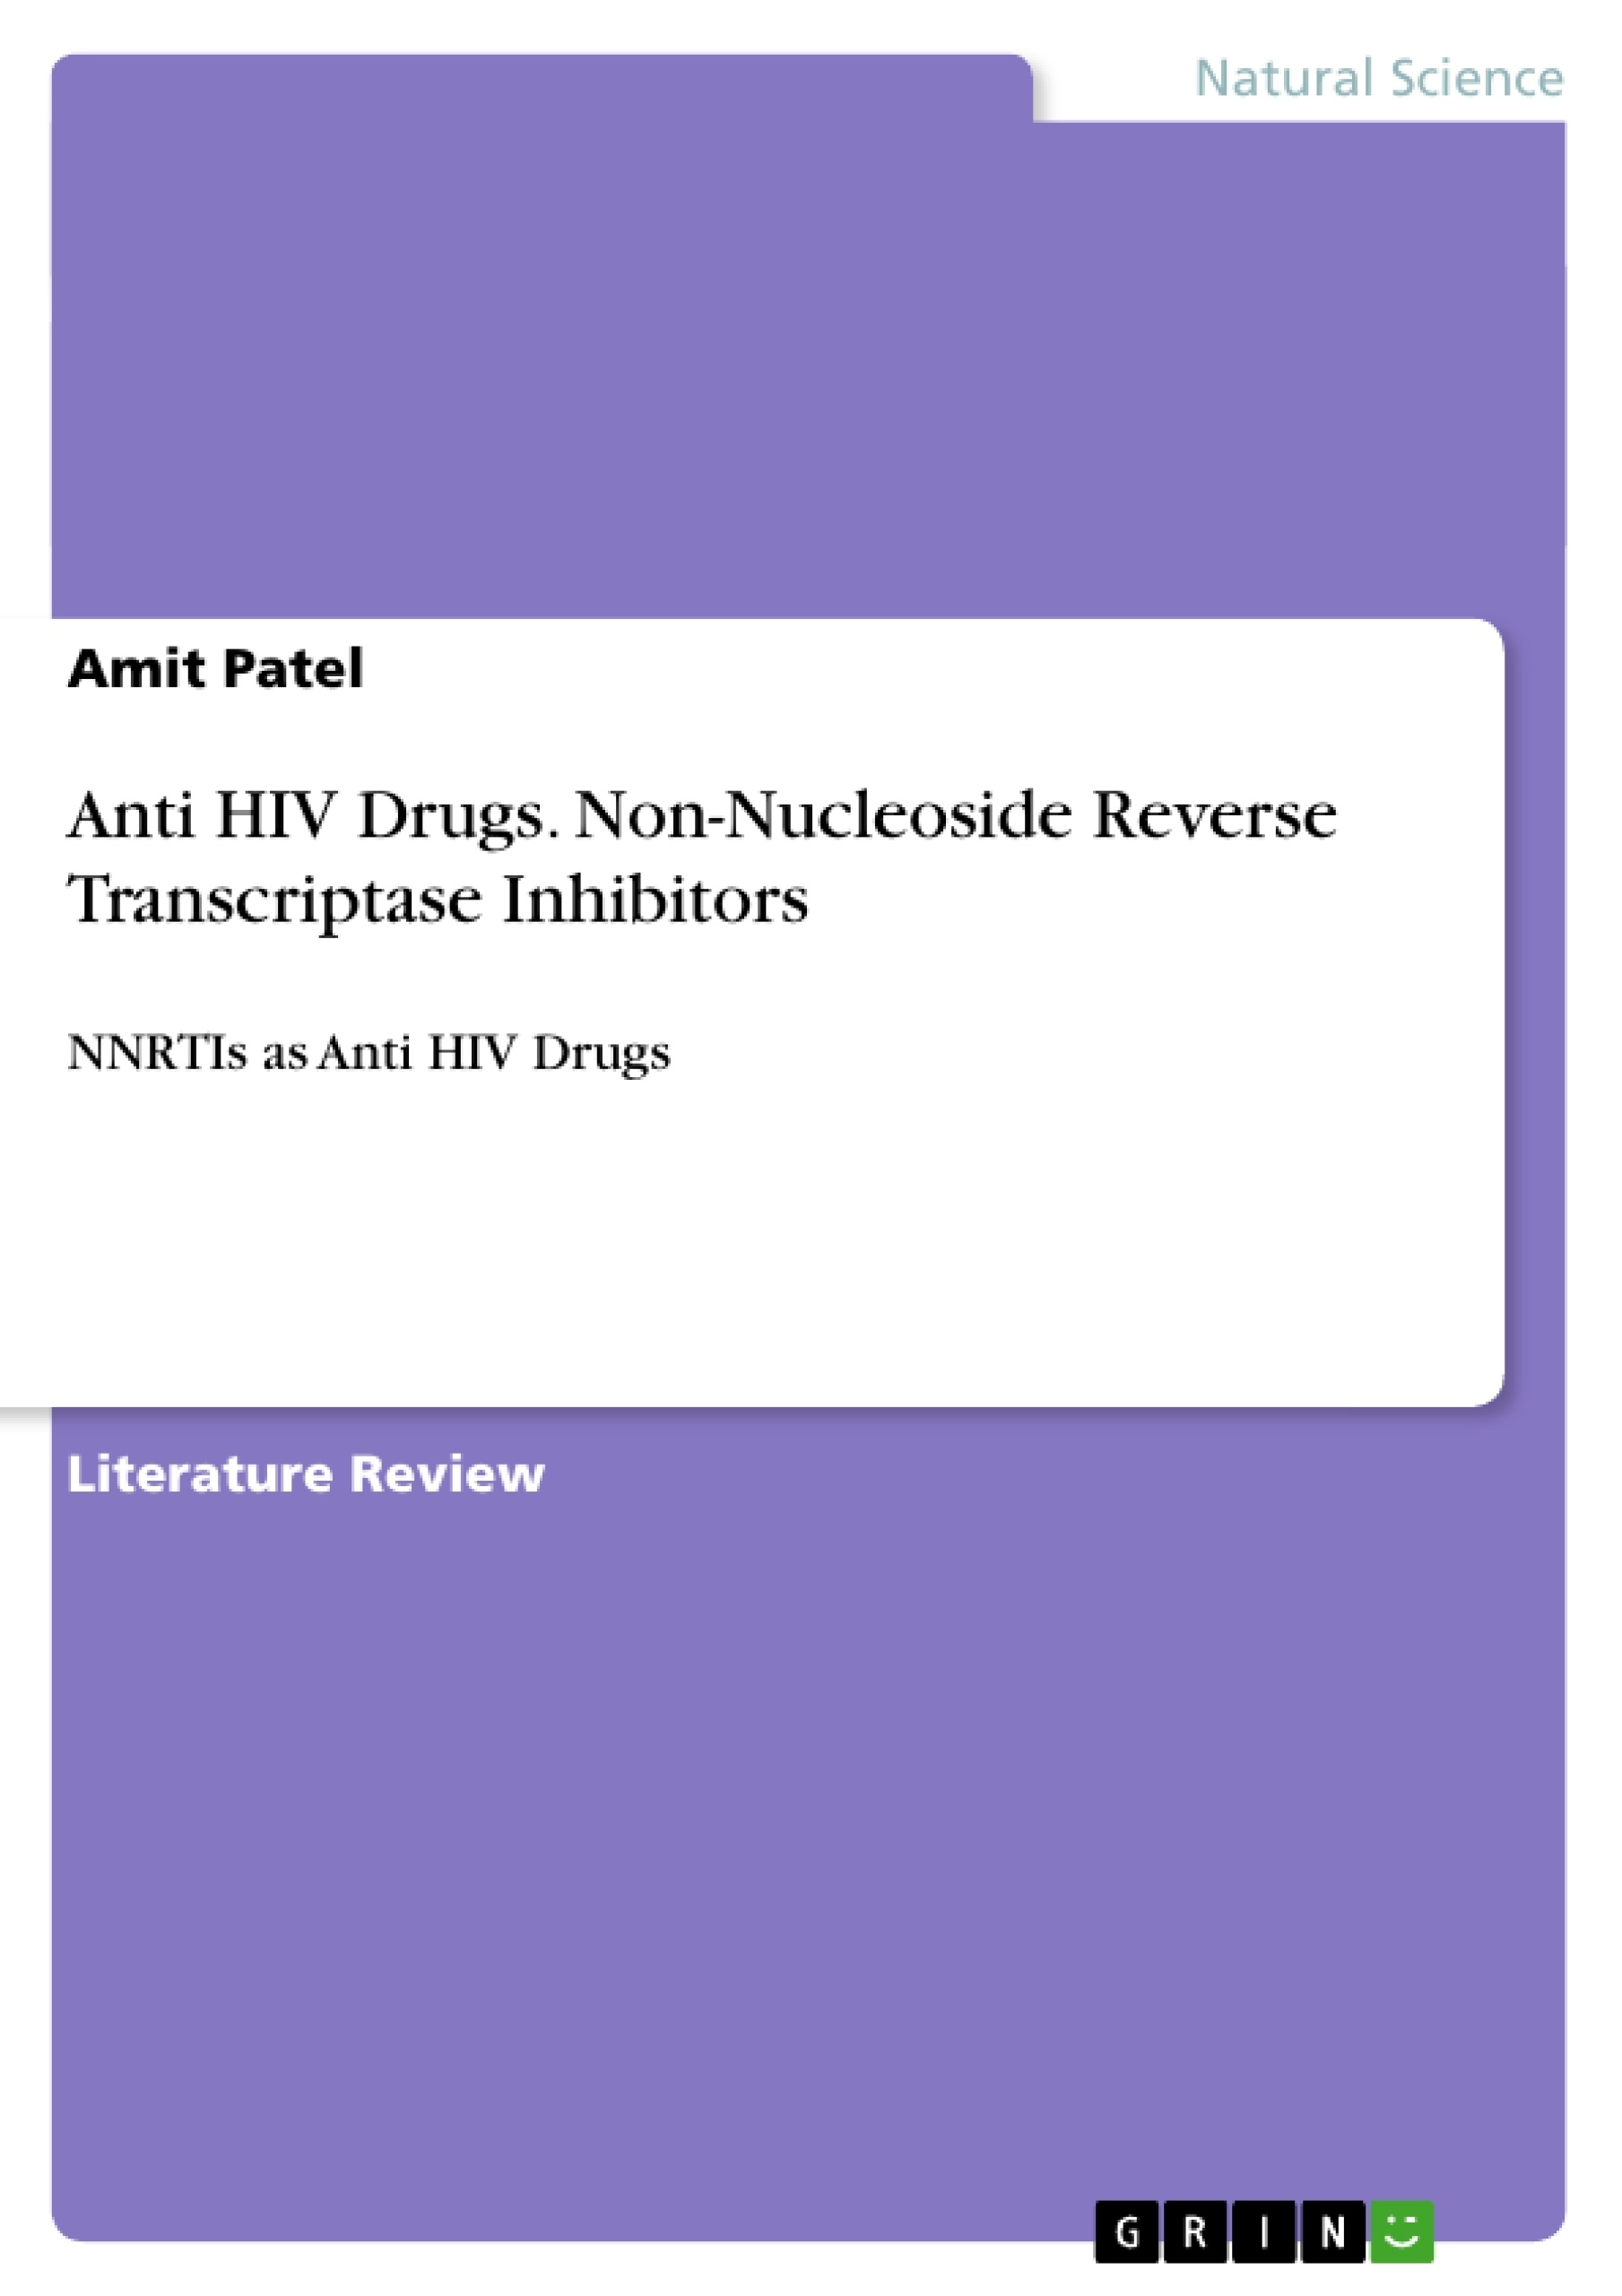 Title: Anti HIV Drugs. Non-Nucleoside Reverse Transcriptase Inhibitors